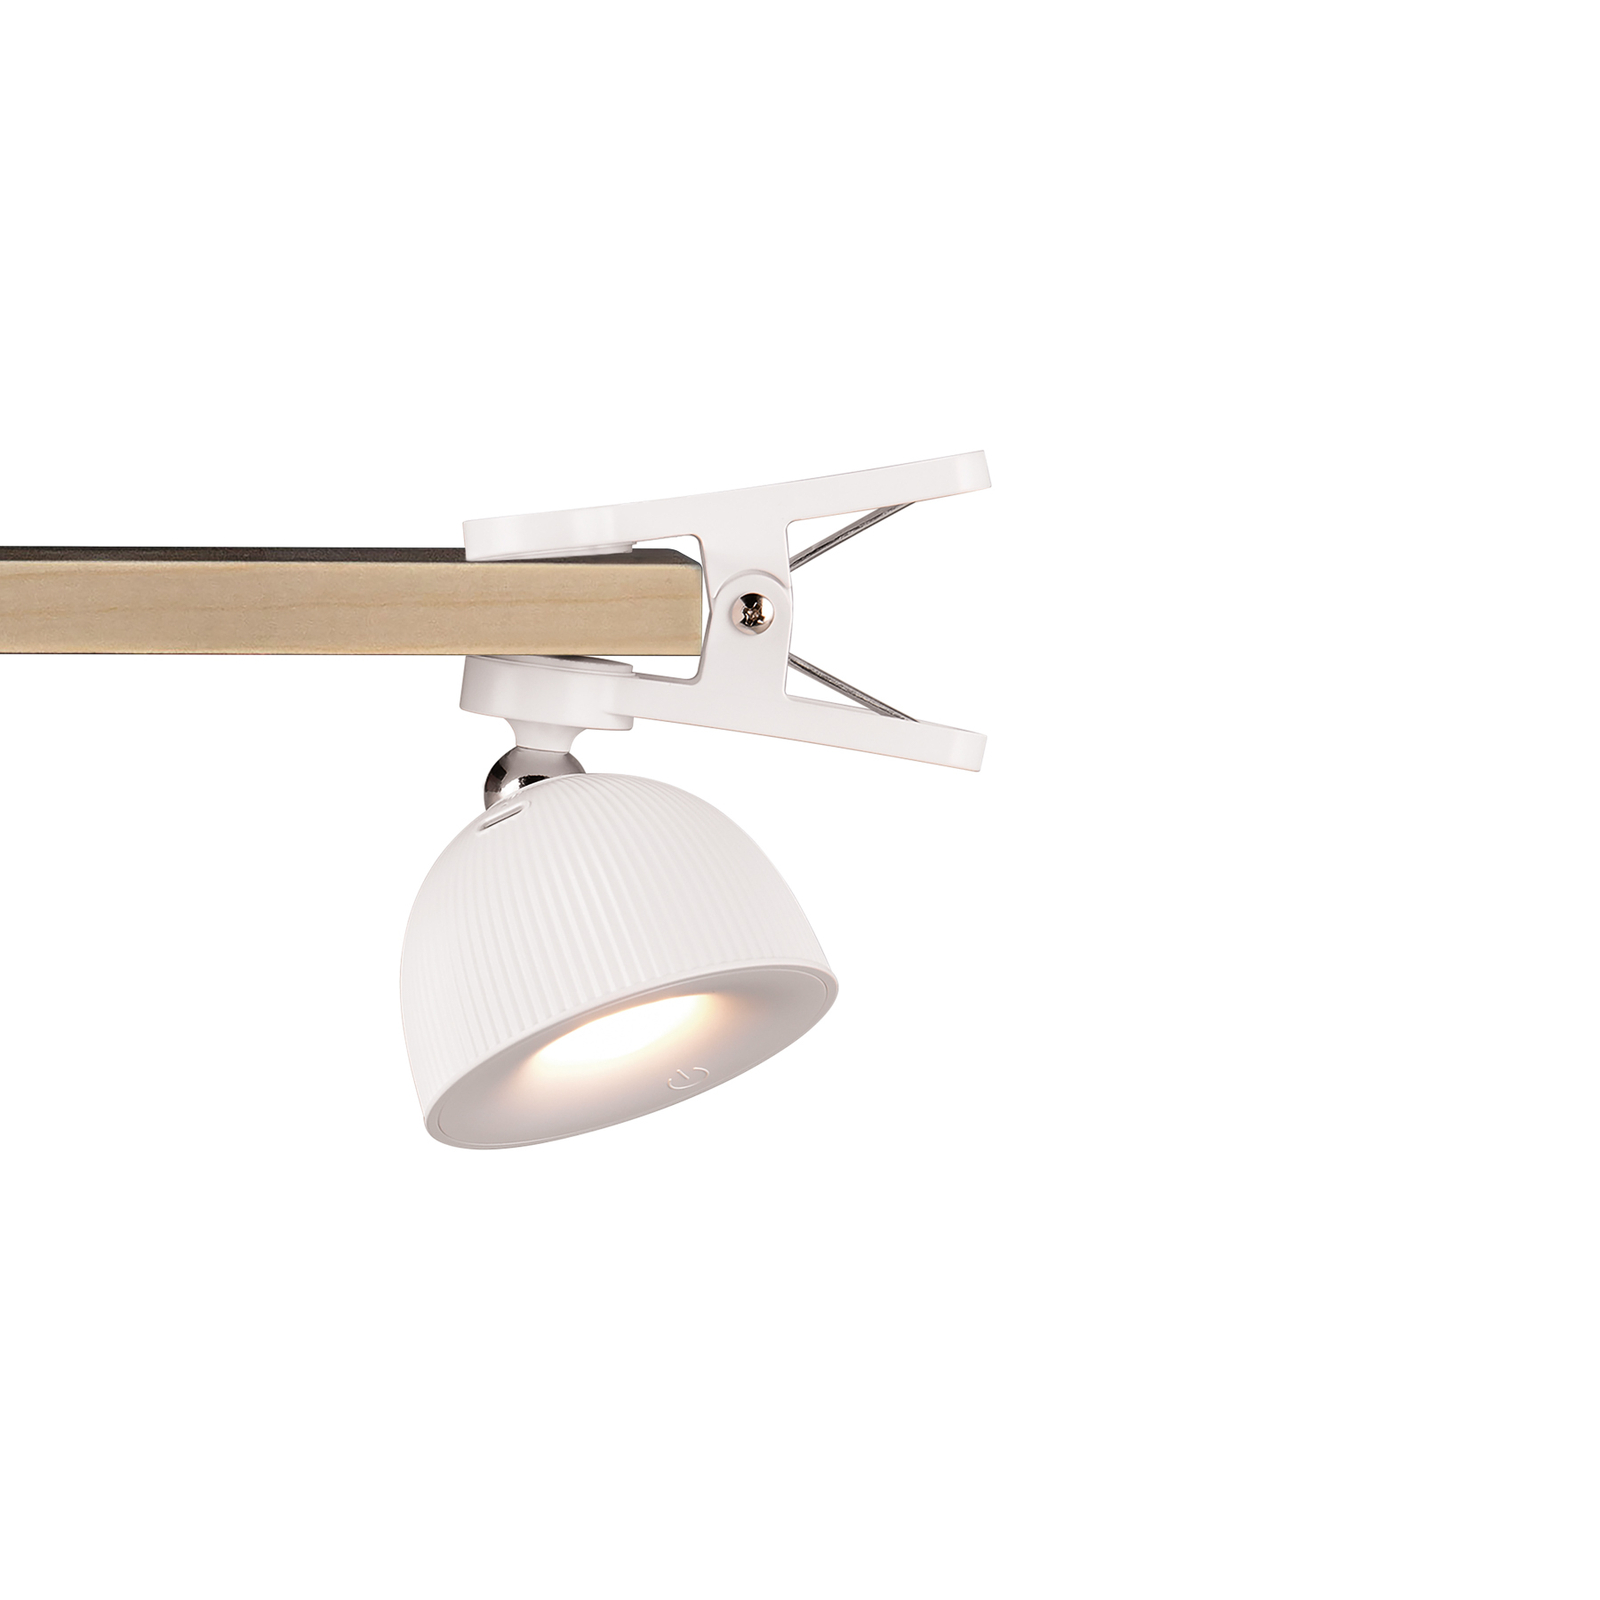 Maxima LED tafellamp, wit, hoogte 41 cm, kunststof